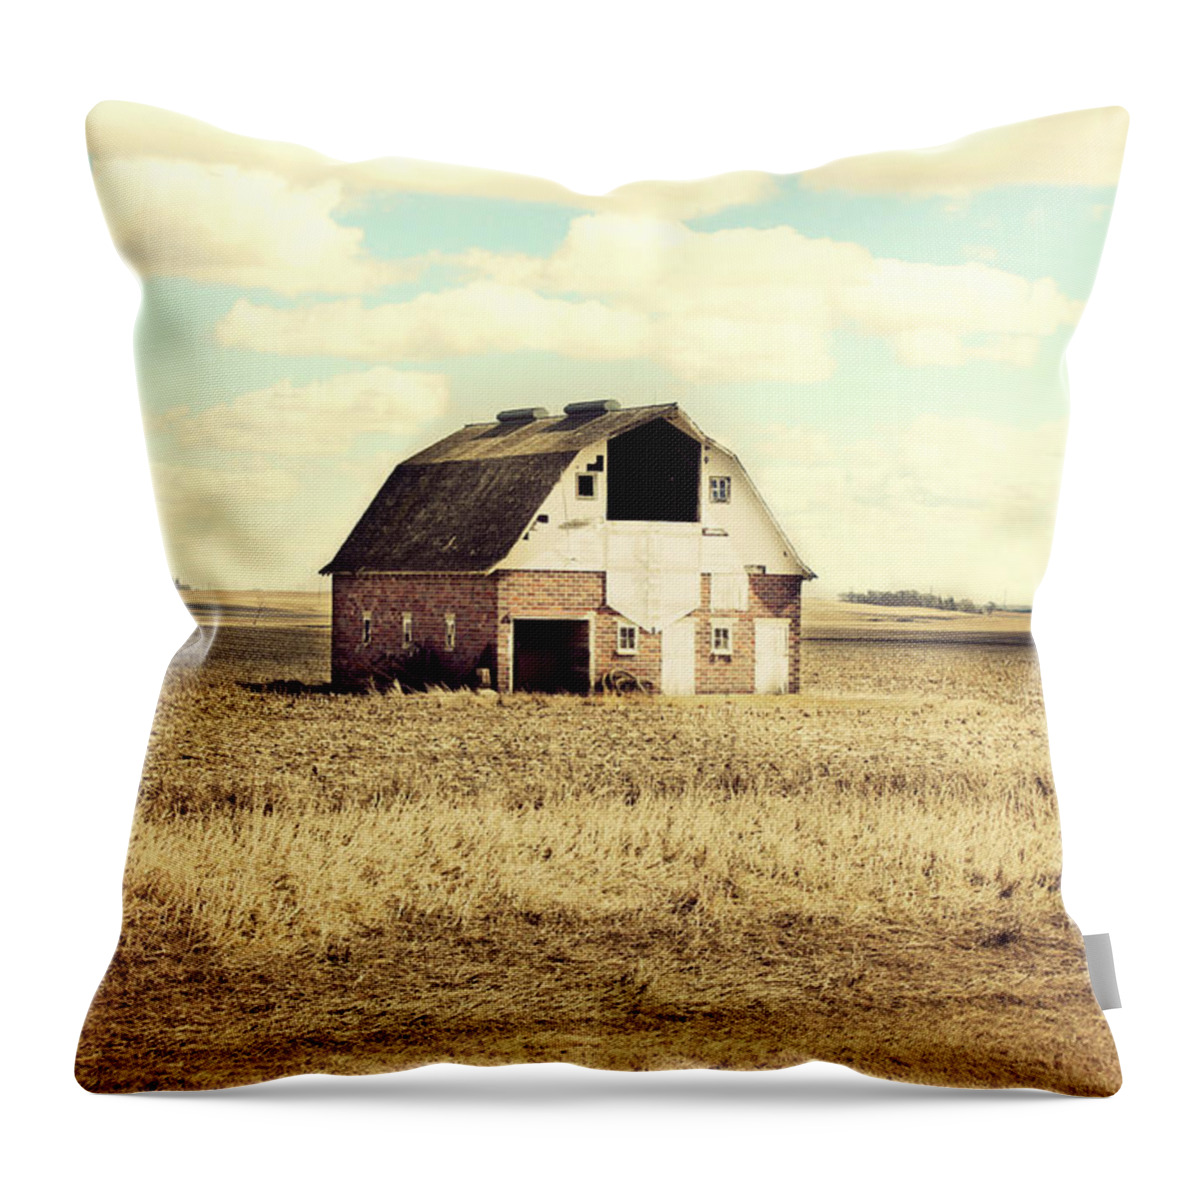 Barn Throw Pillow featuring the photograph Everly Brick Barn by Julie Hamilton